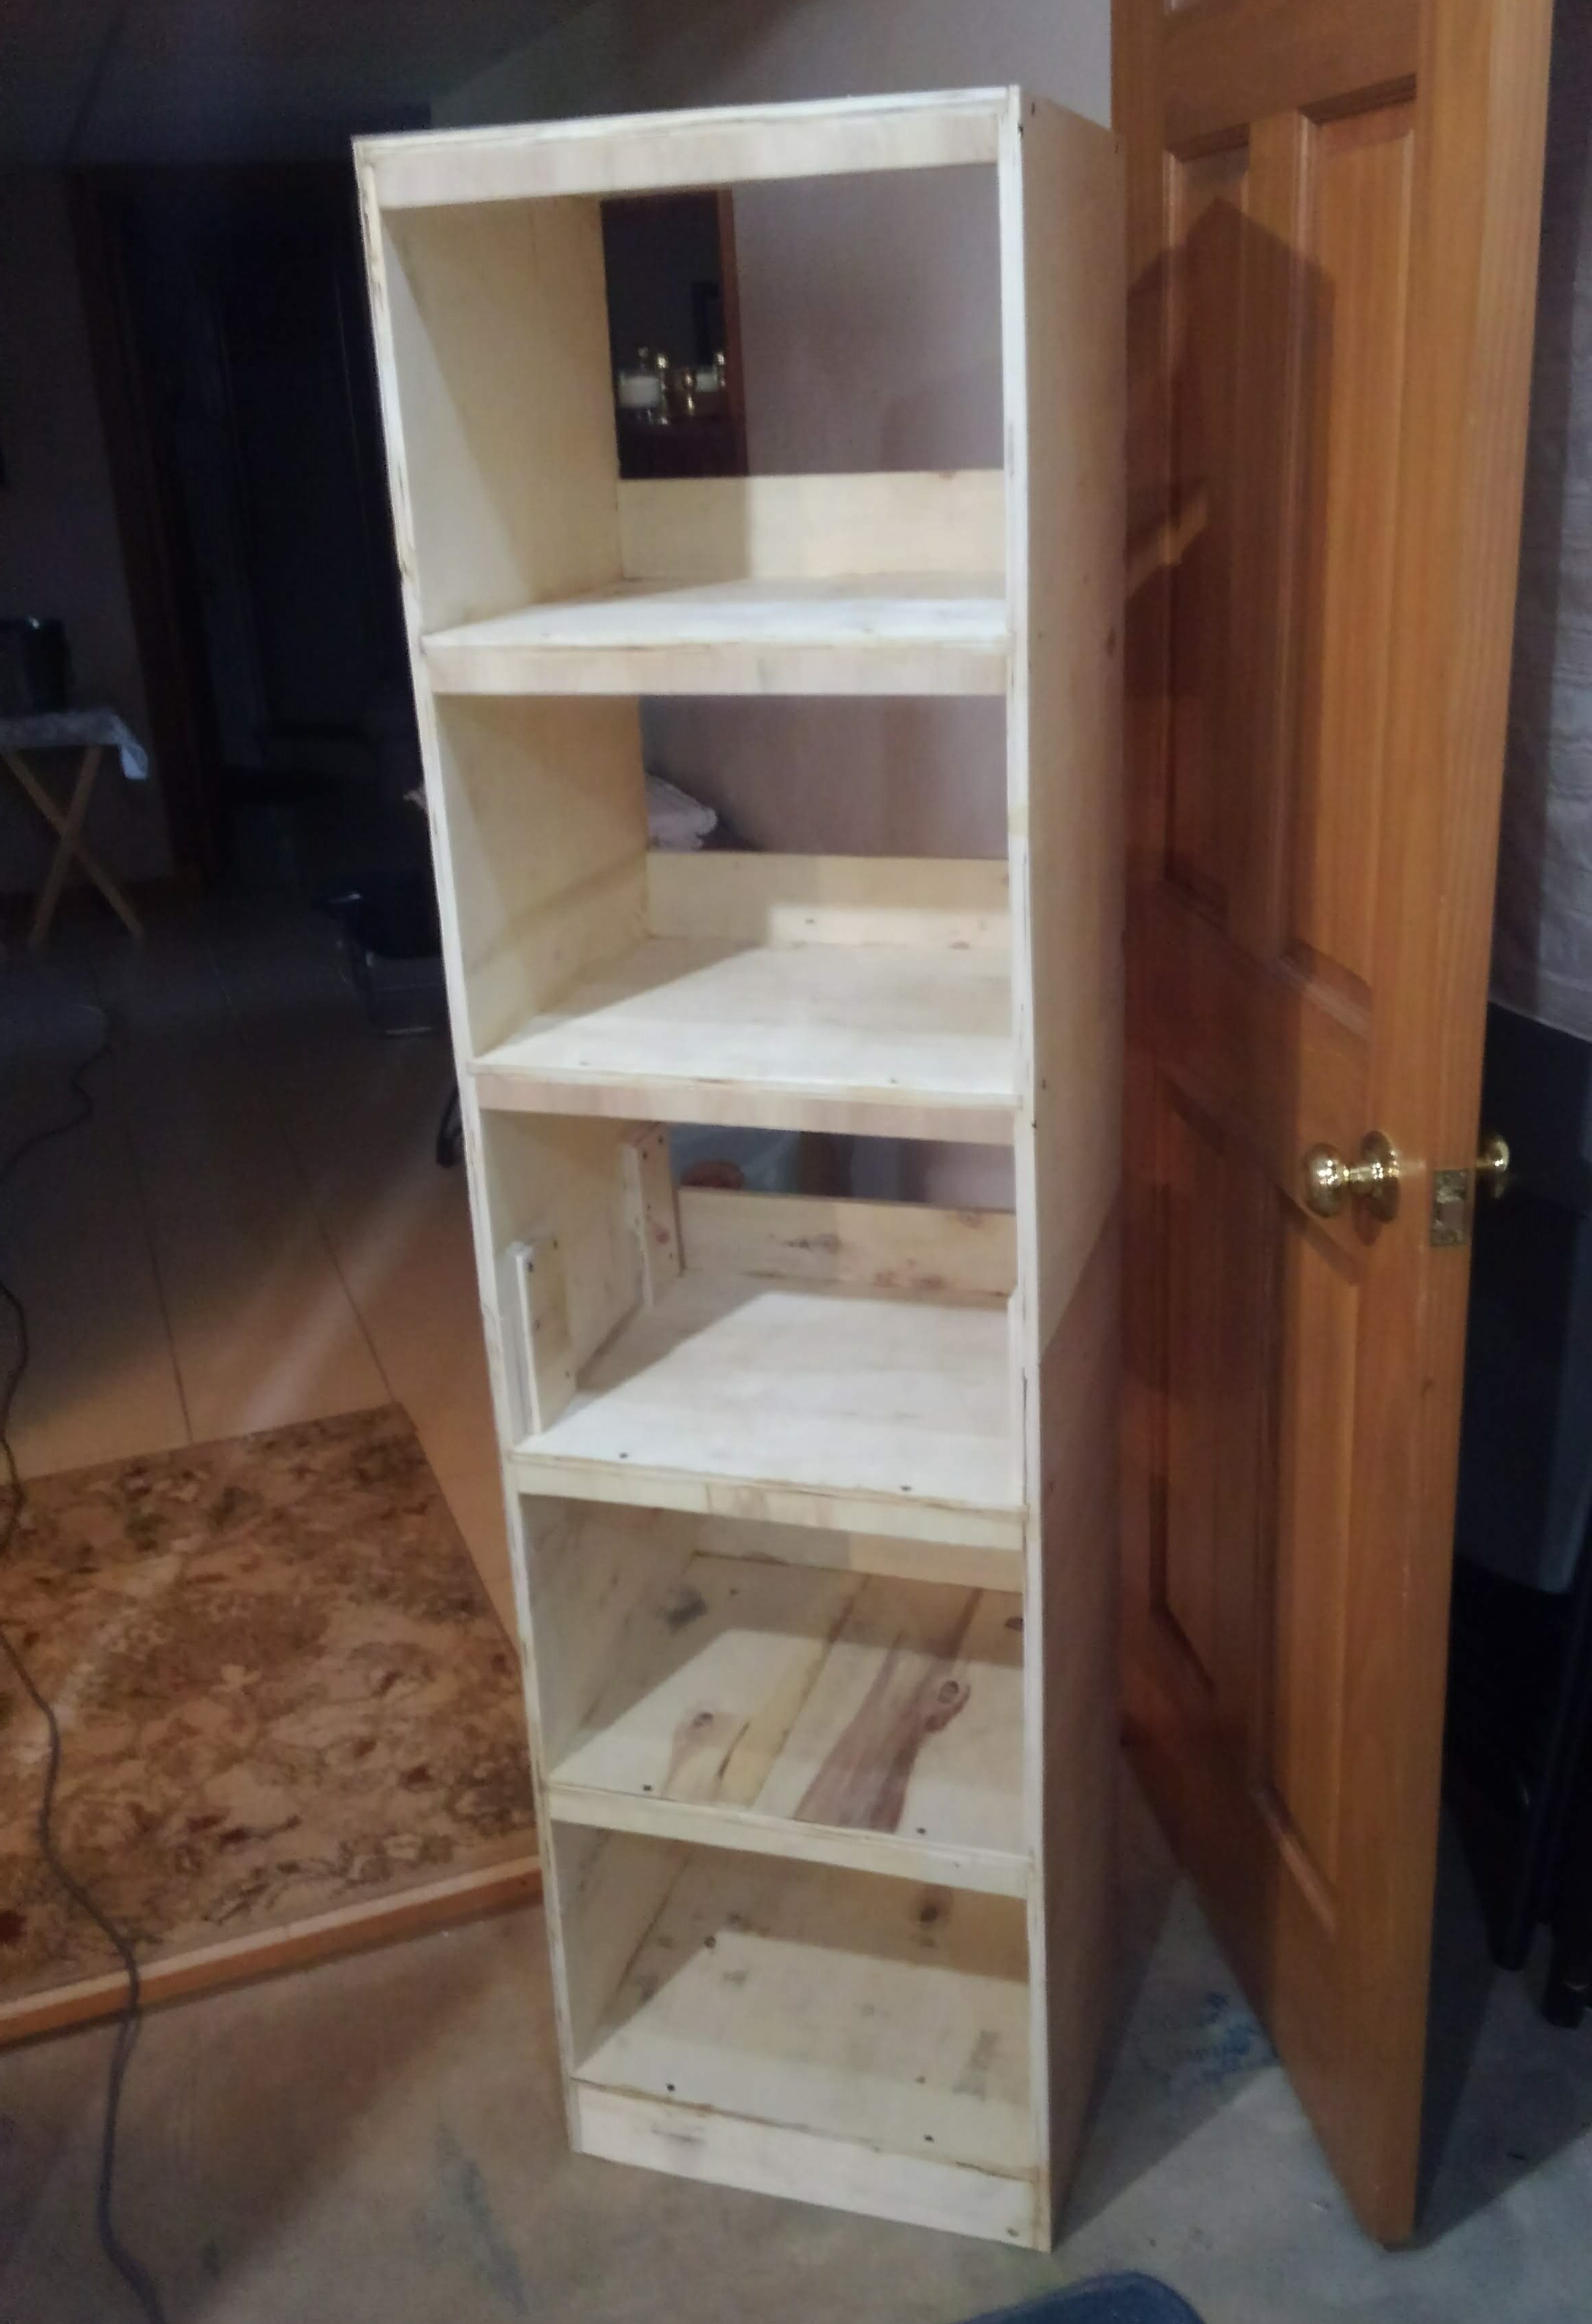 a tall, unfinished shelf